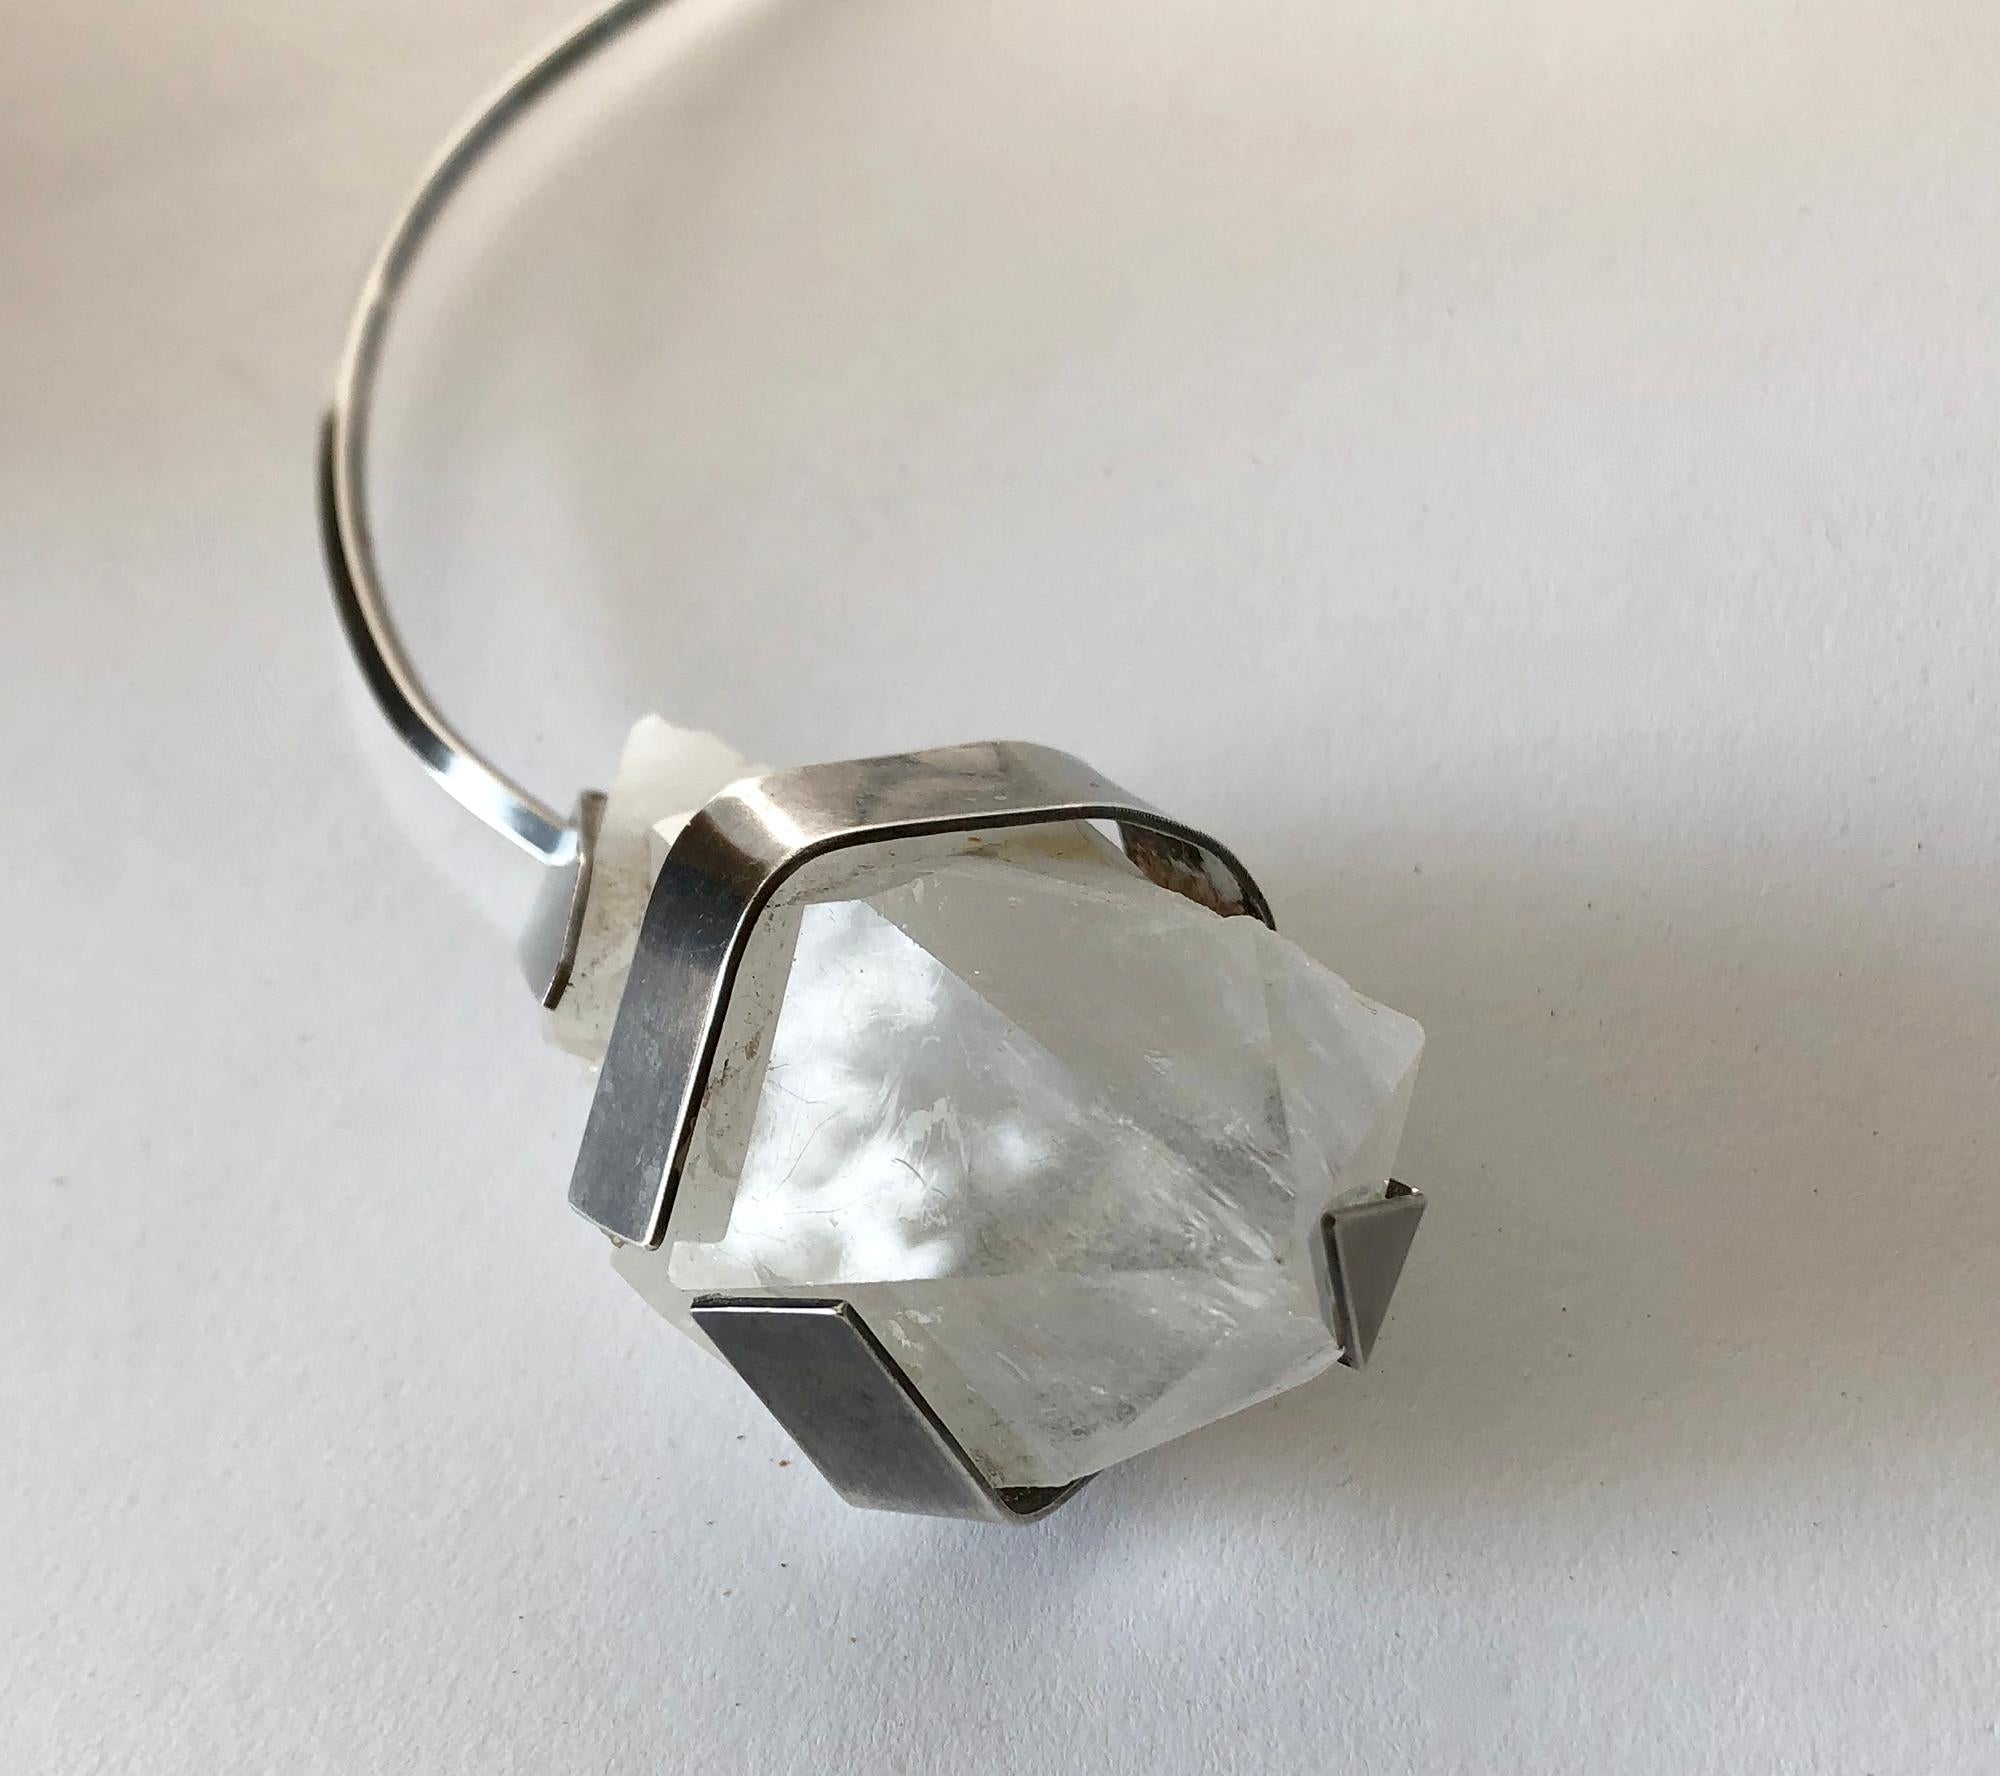 raw quartz necklace